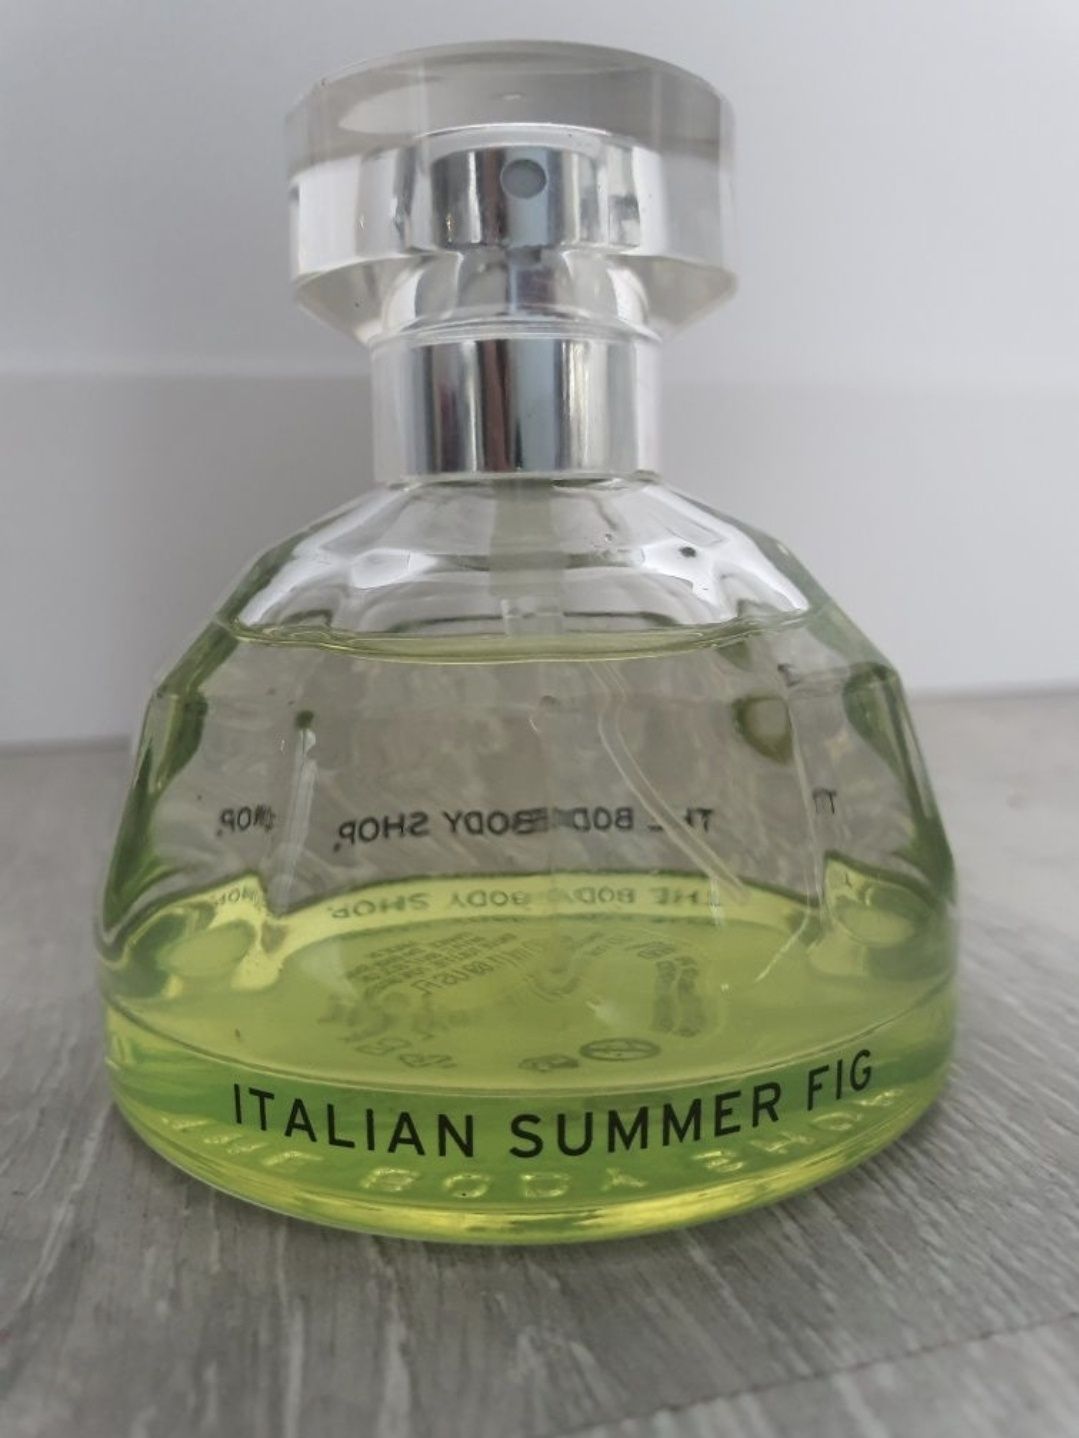 The Body Shop Italian Summer Fig 50ml UNIKAT!